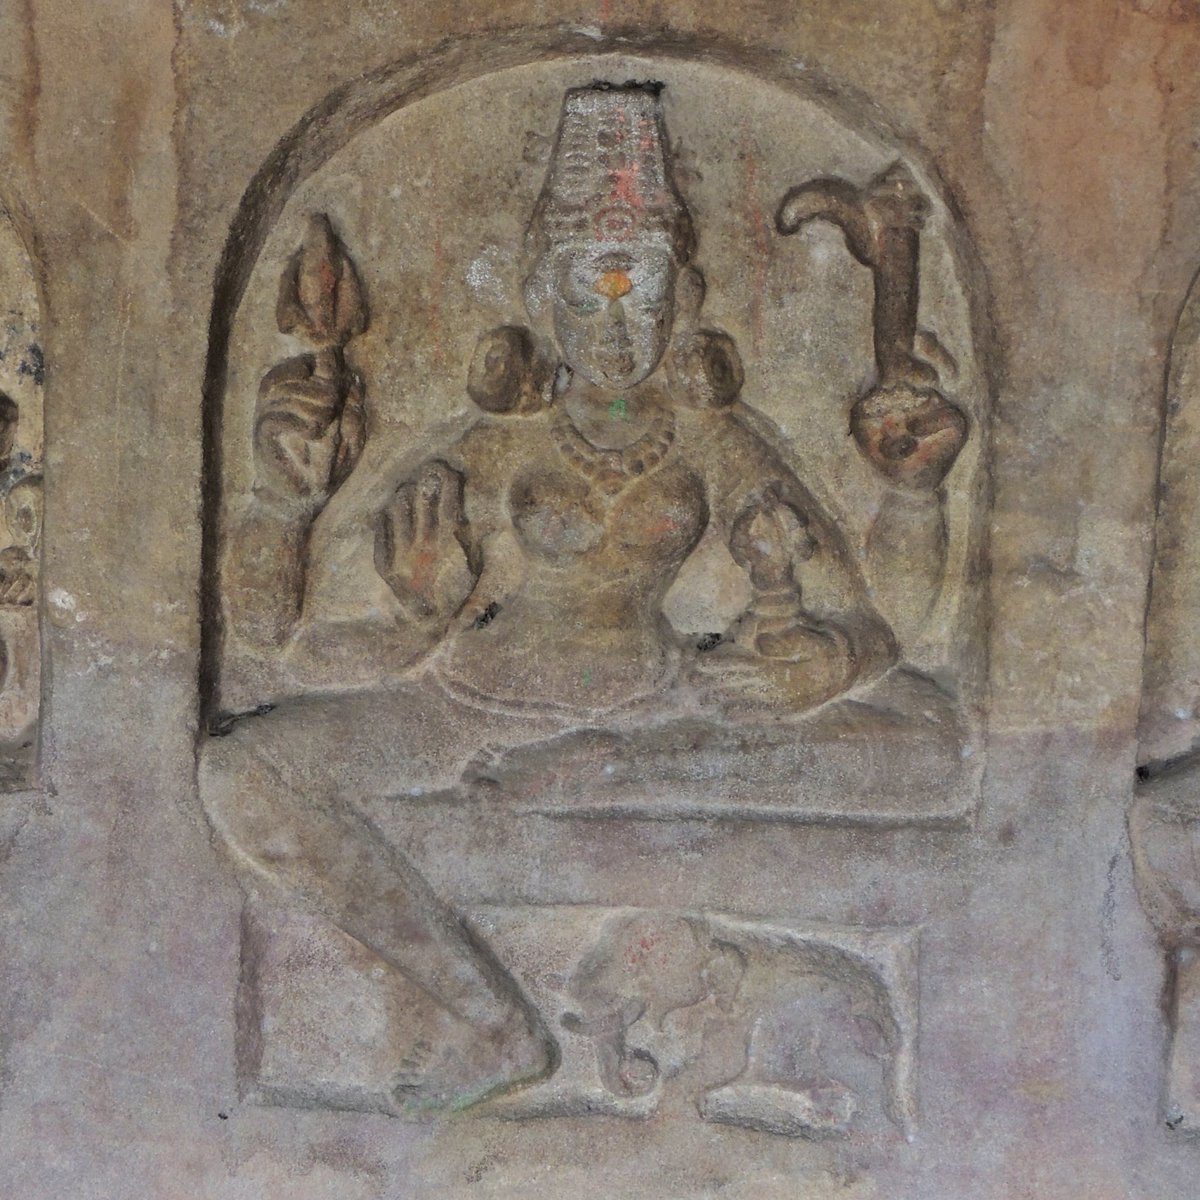 ऐ is for ऐन्द्री. Khandgiri caves near Bhubaneshwar has 11th century CE carvings of Tirthankars and their Shasana Devis. Pic 8 shows the counterpart of Aindri, holding vajra and elephant vahana.  #AksharArt  #ArtByTheLetter (10/11)